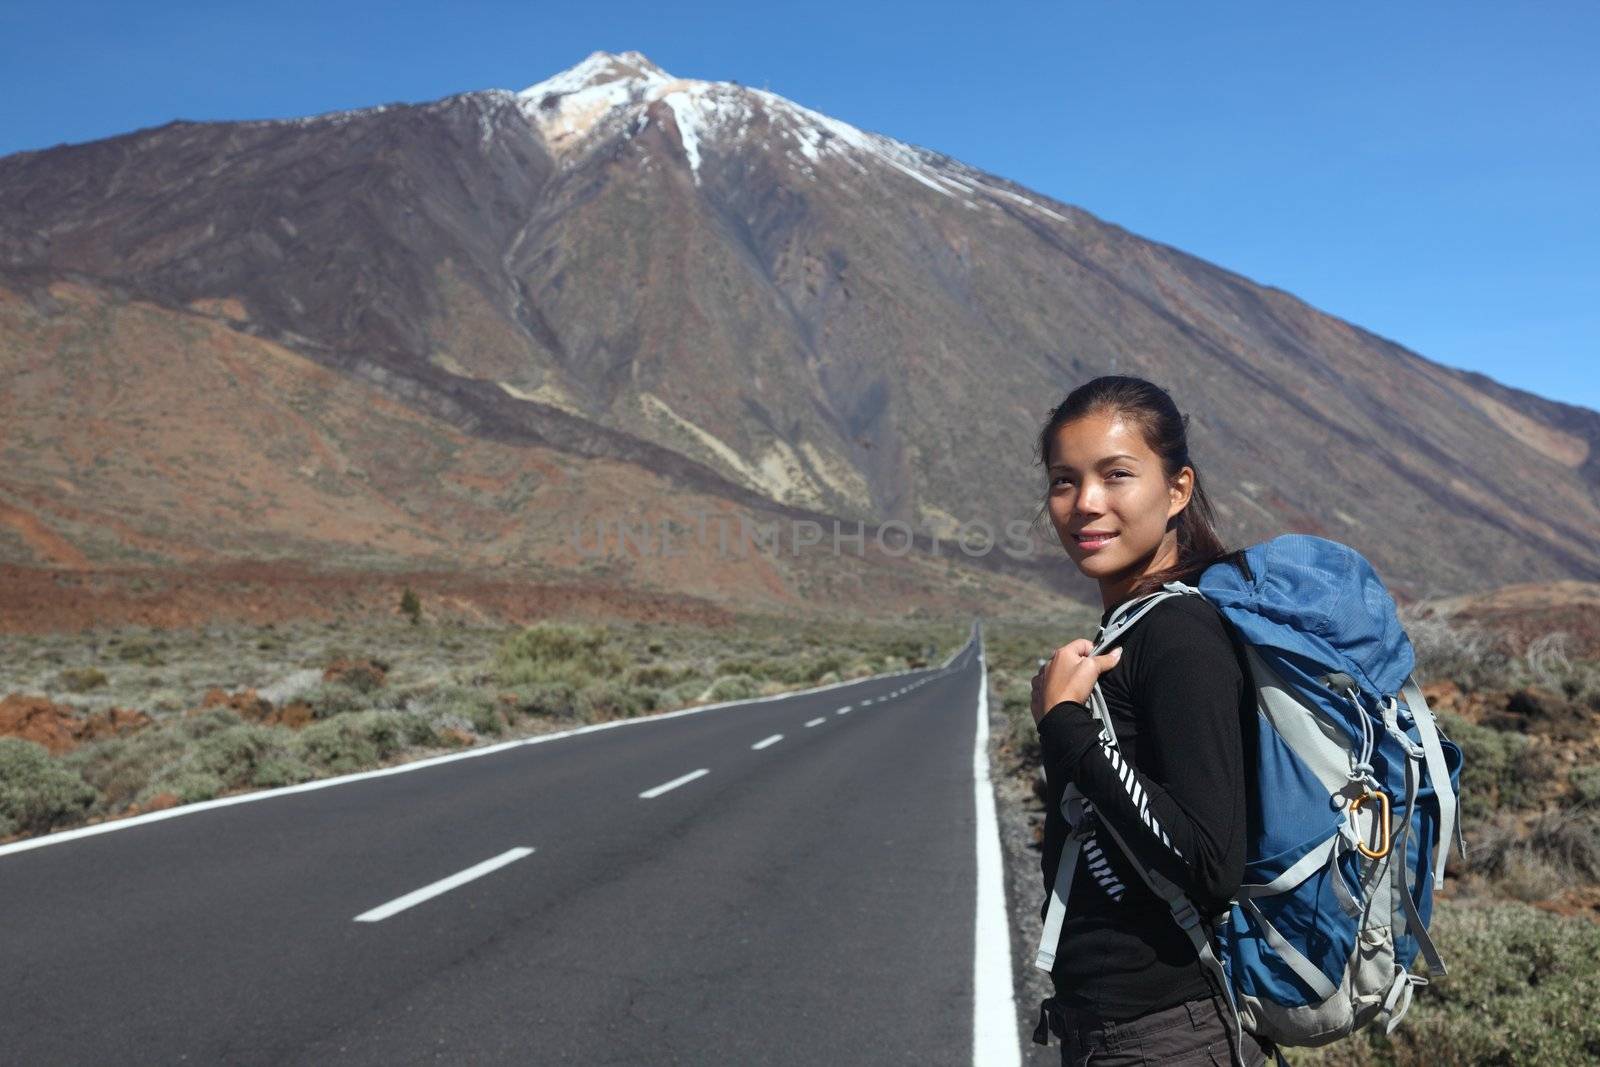 Traveler / hiker hitchhiking on road side. Teide, Tenerife.